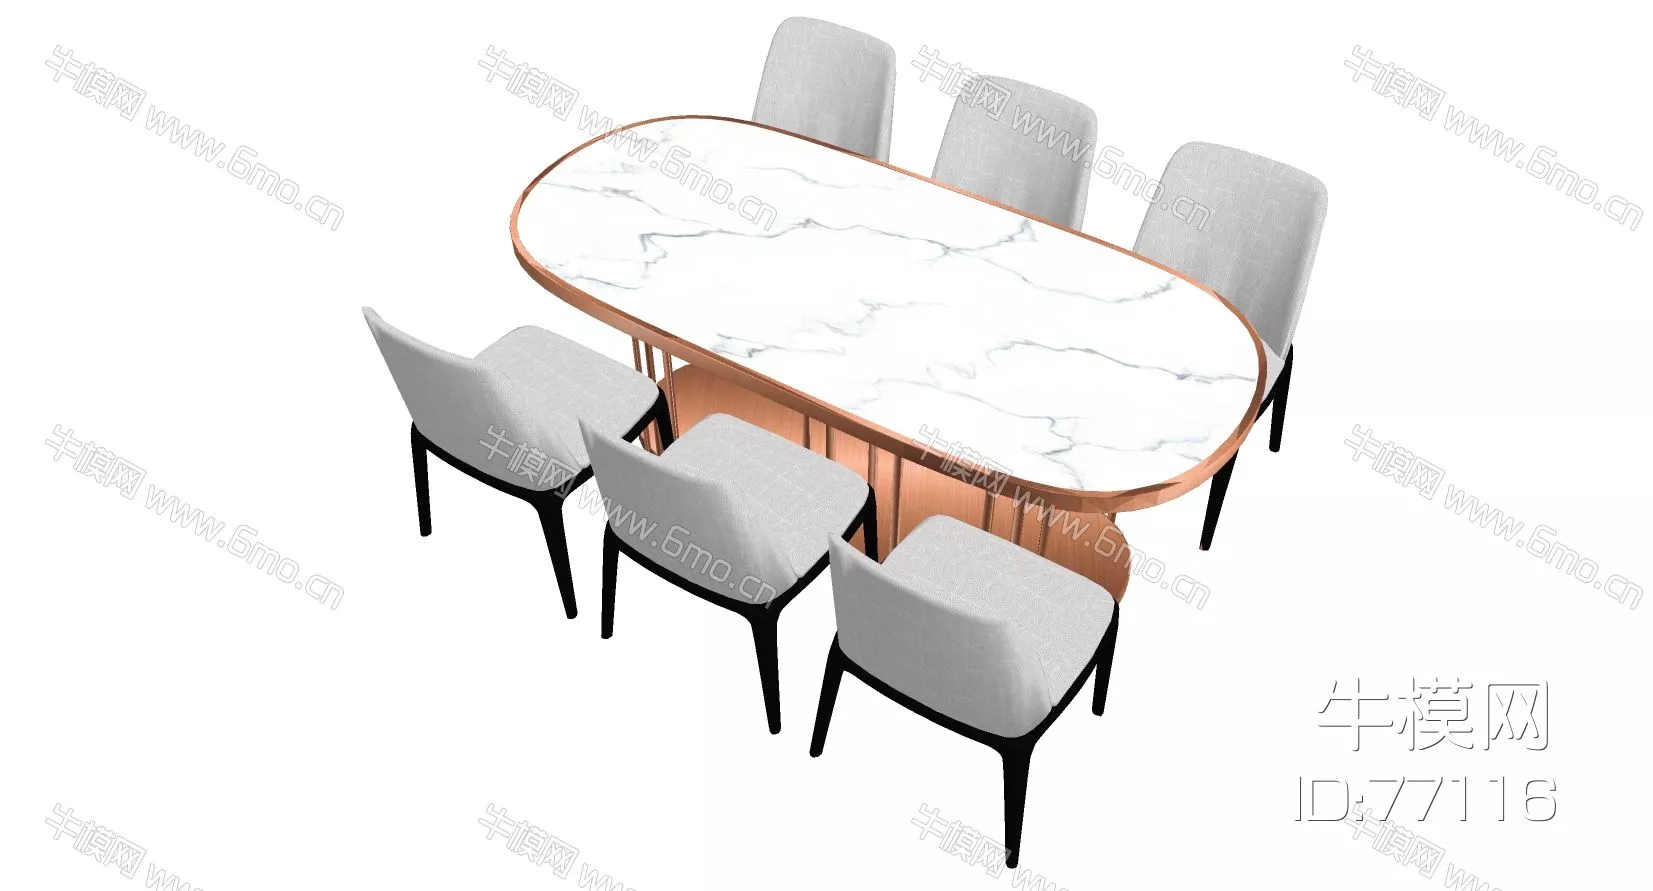 NORDIC DINING TABLE SET - SKETCHUP 3D MODEL - ENSCAPE - 77116